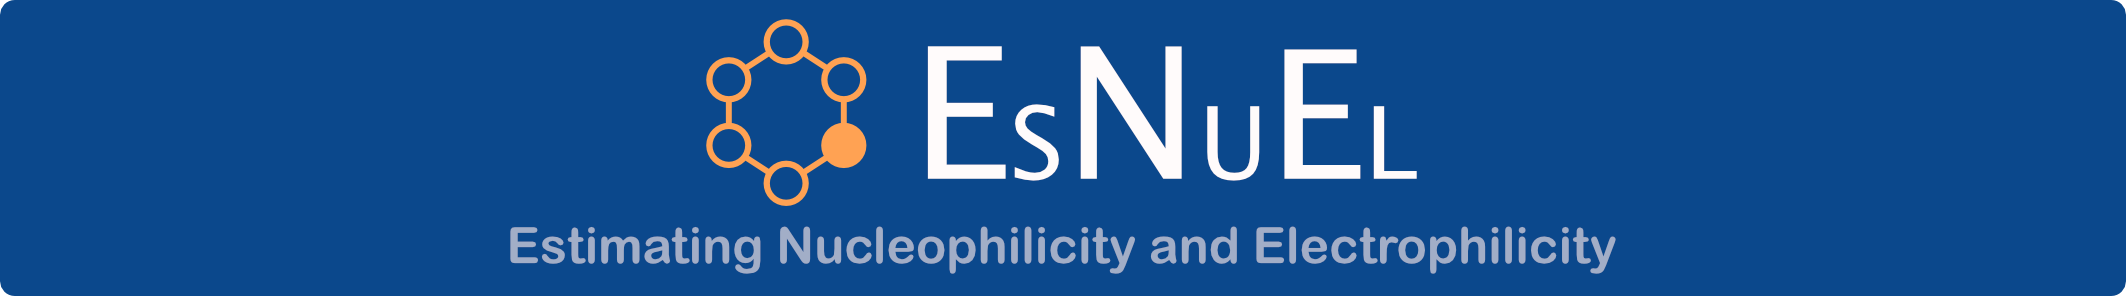 ESNUEL logo